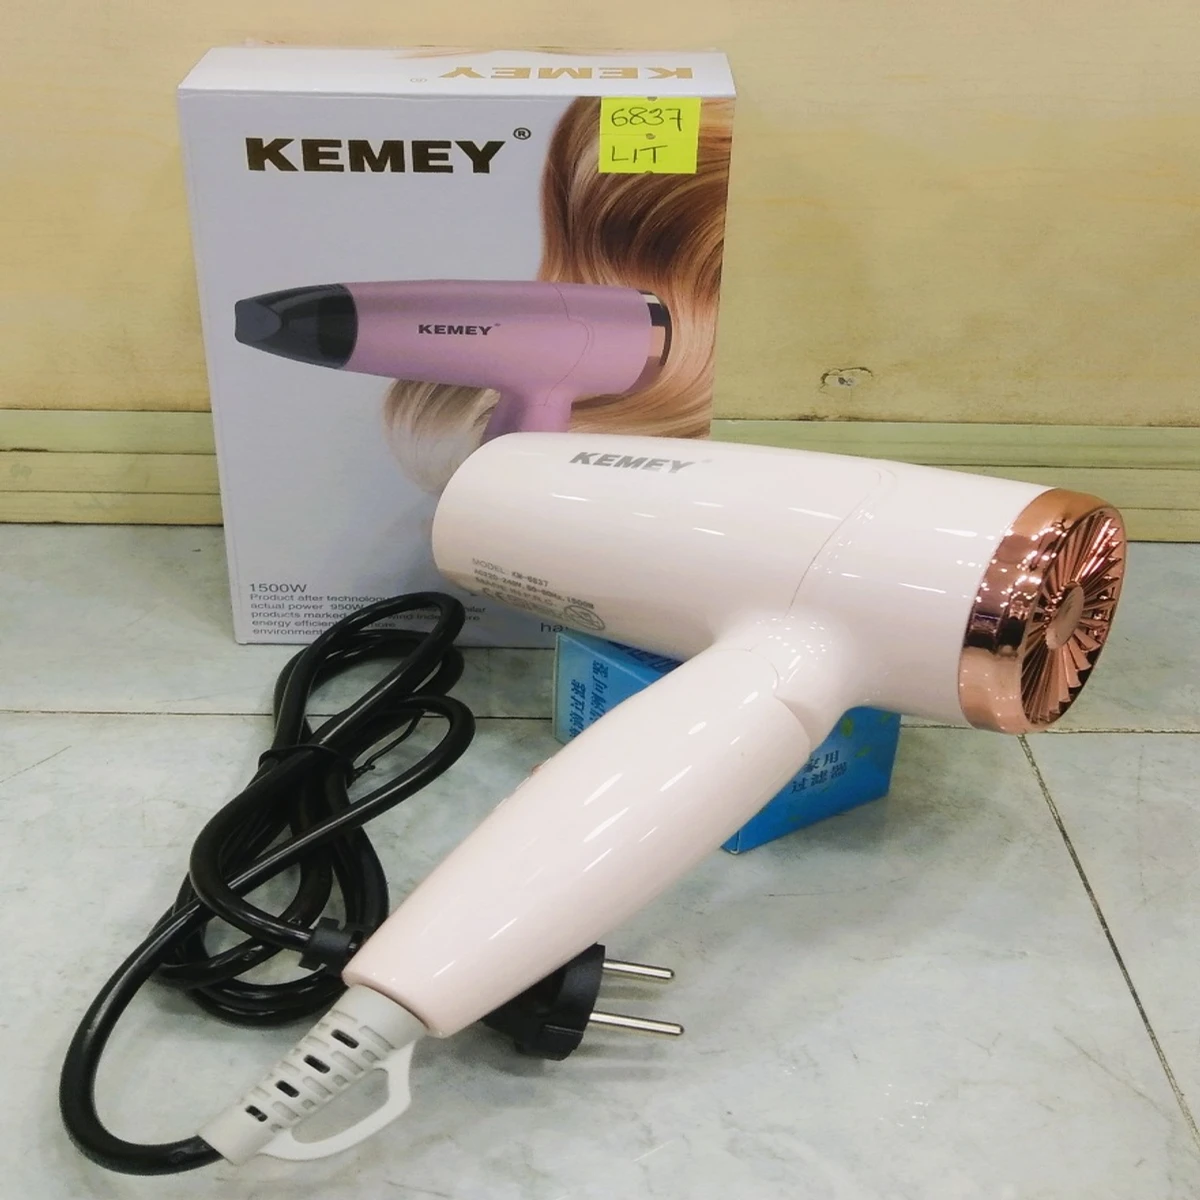 Kemie hair dryer